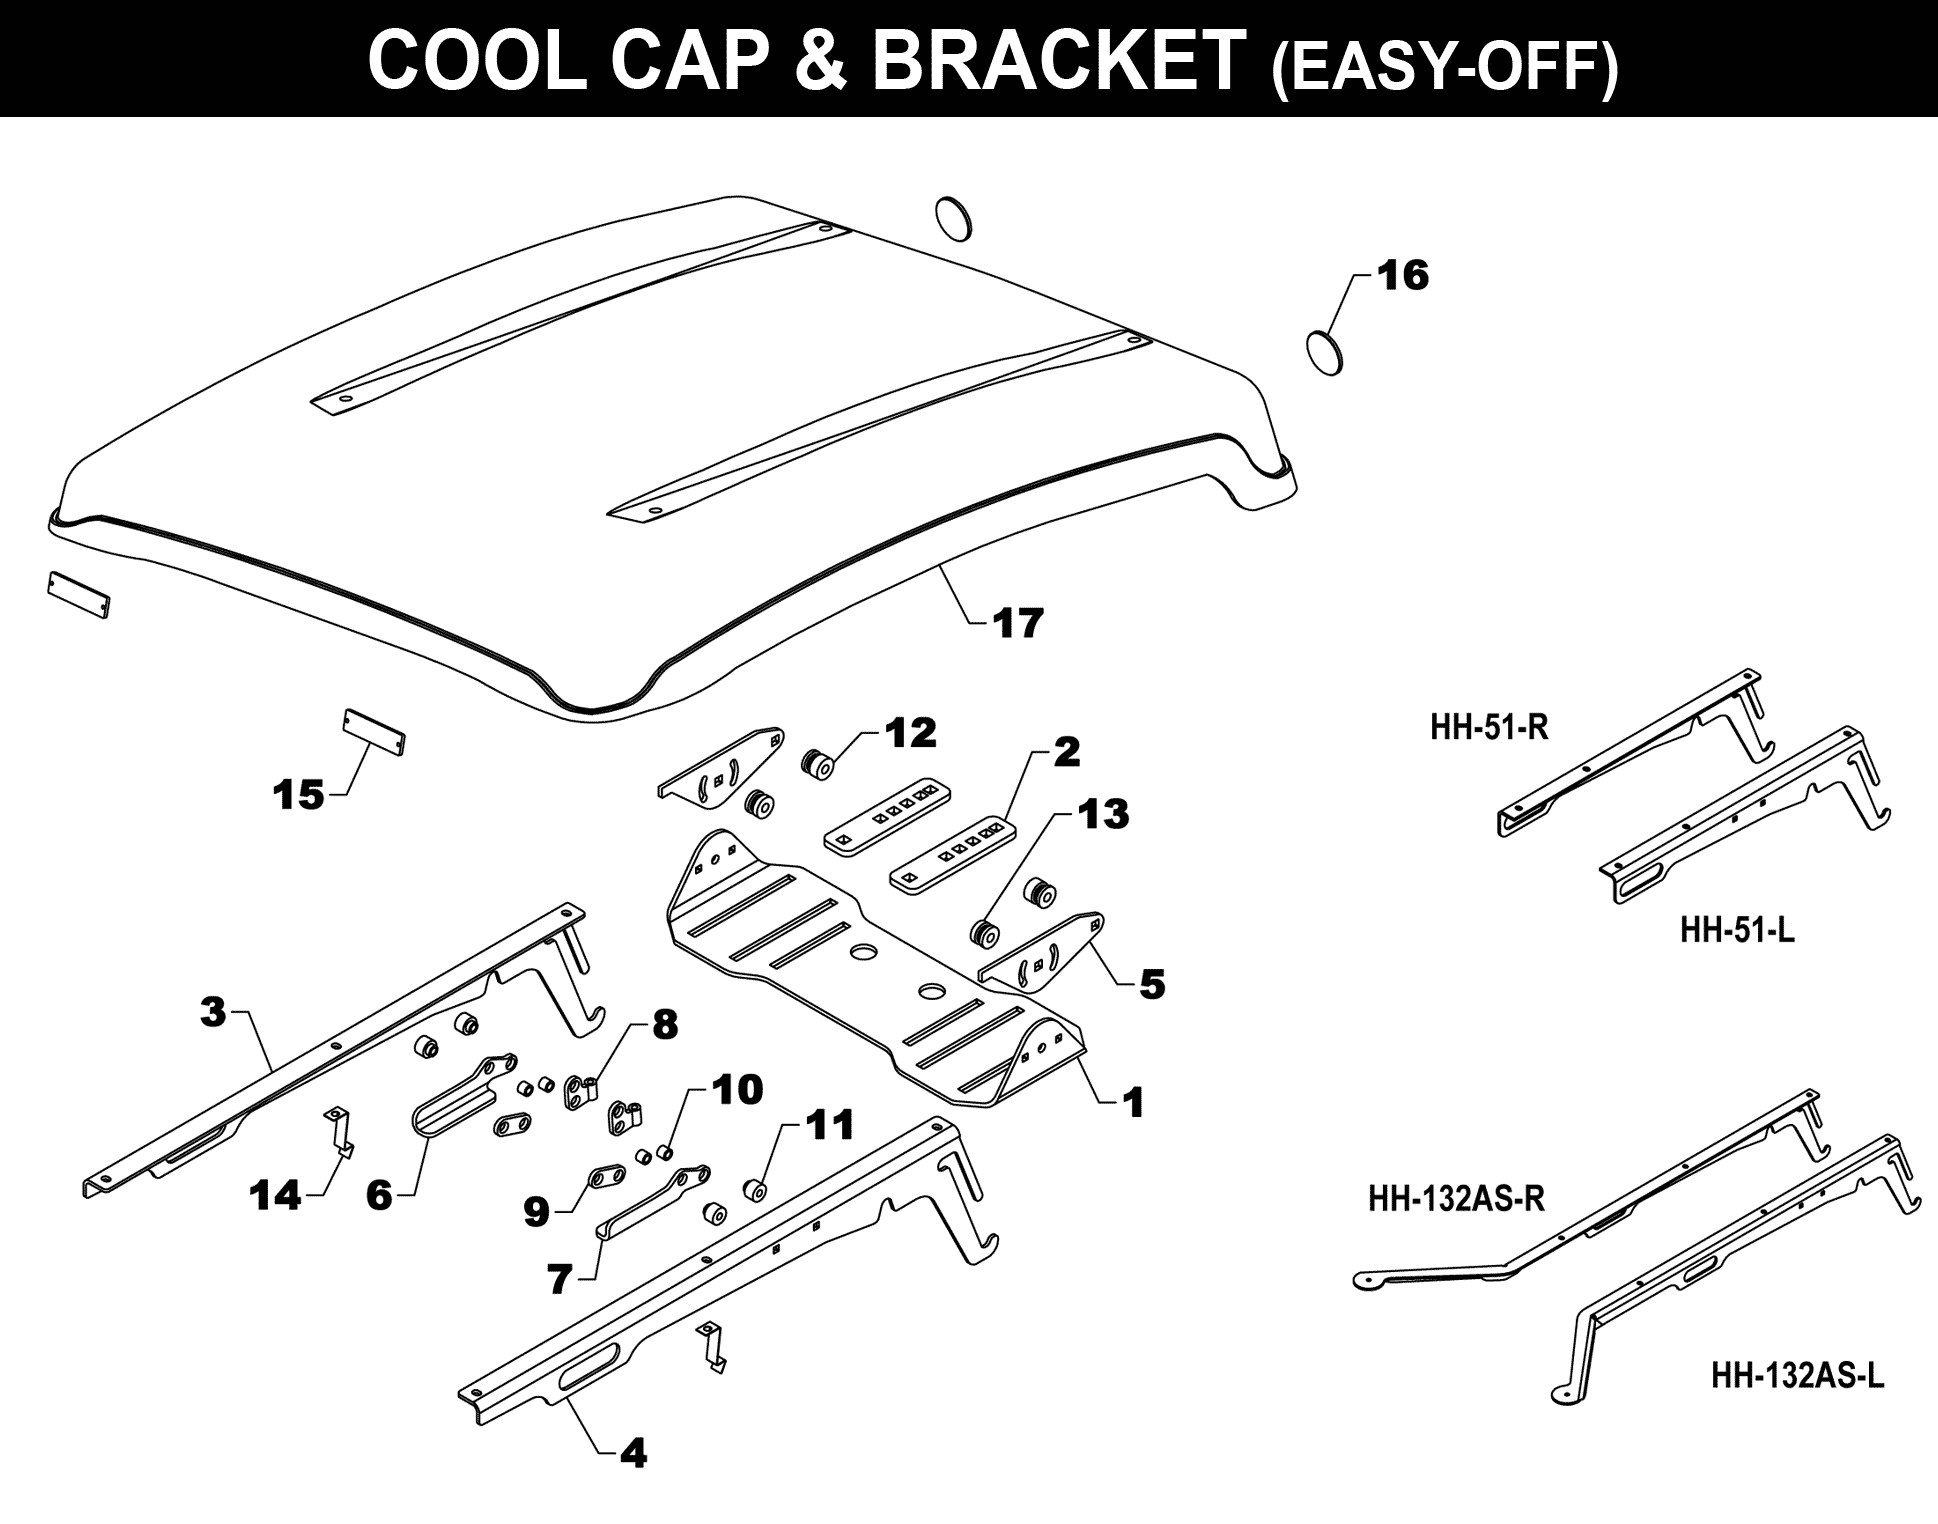 Cool Cap (Easy-Off)